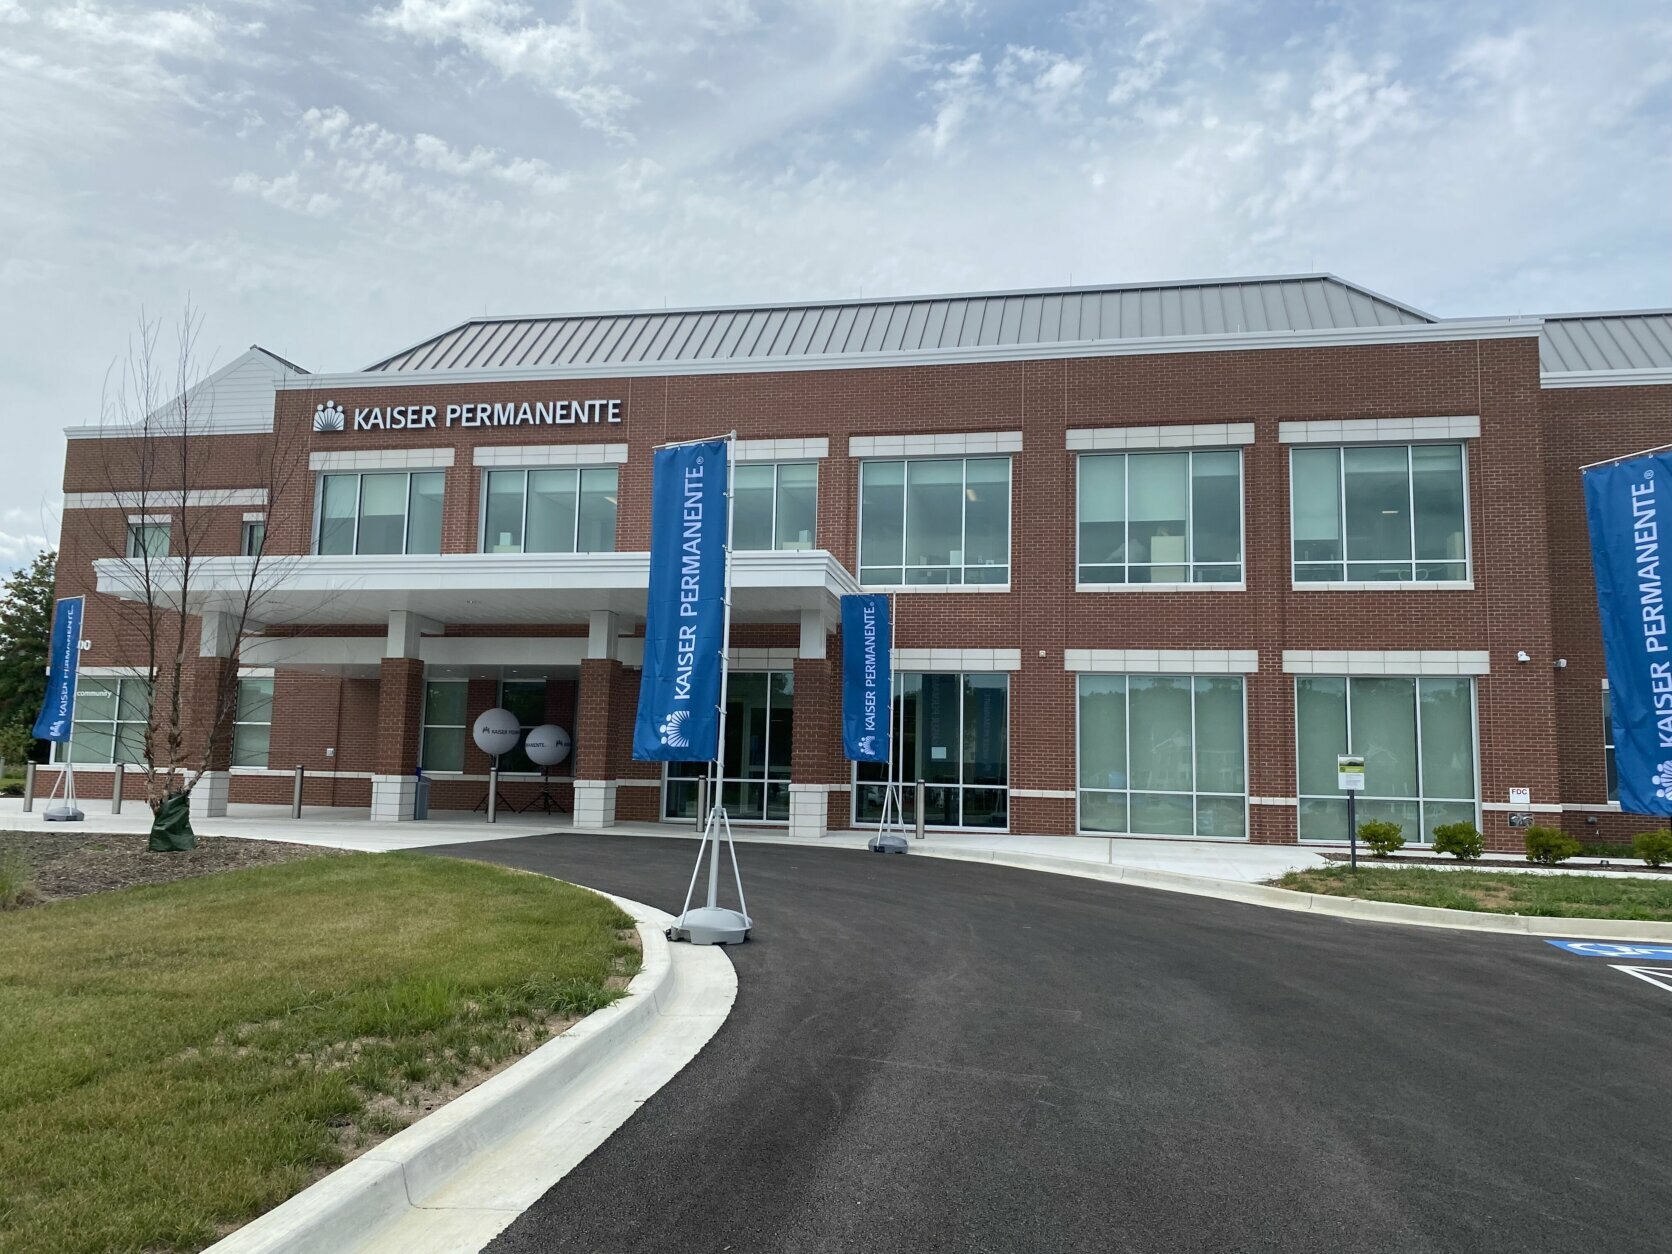 Kaiser Permanente Health System has big expansion plans for DC region